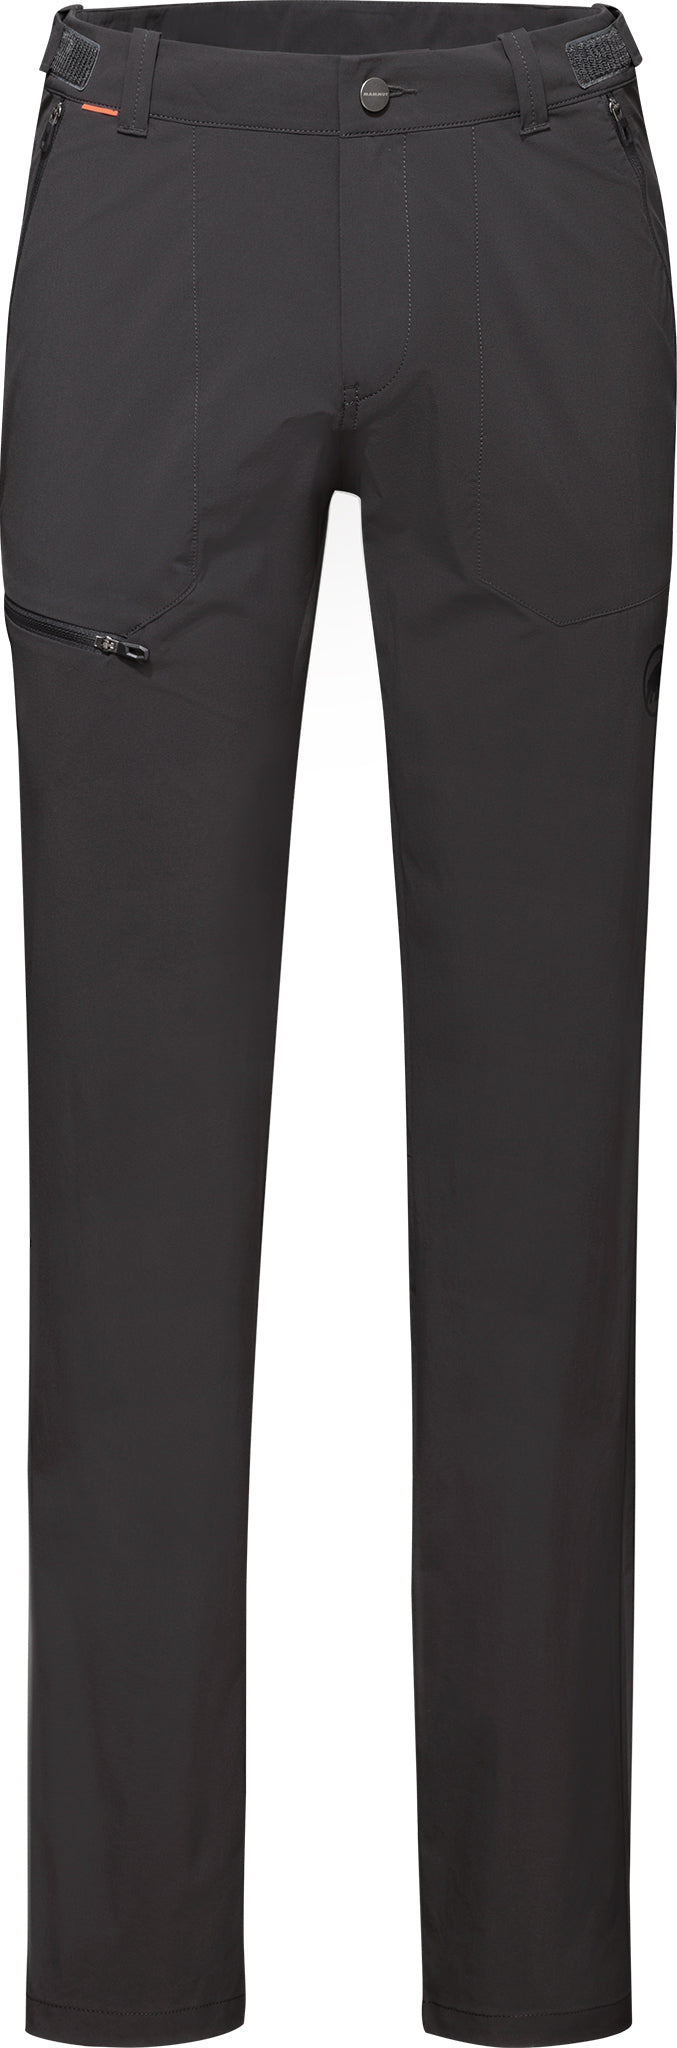 Mammut Runbold Shorts - Sleek and Great for High Output Activities